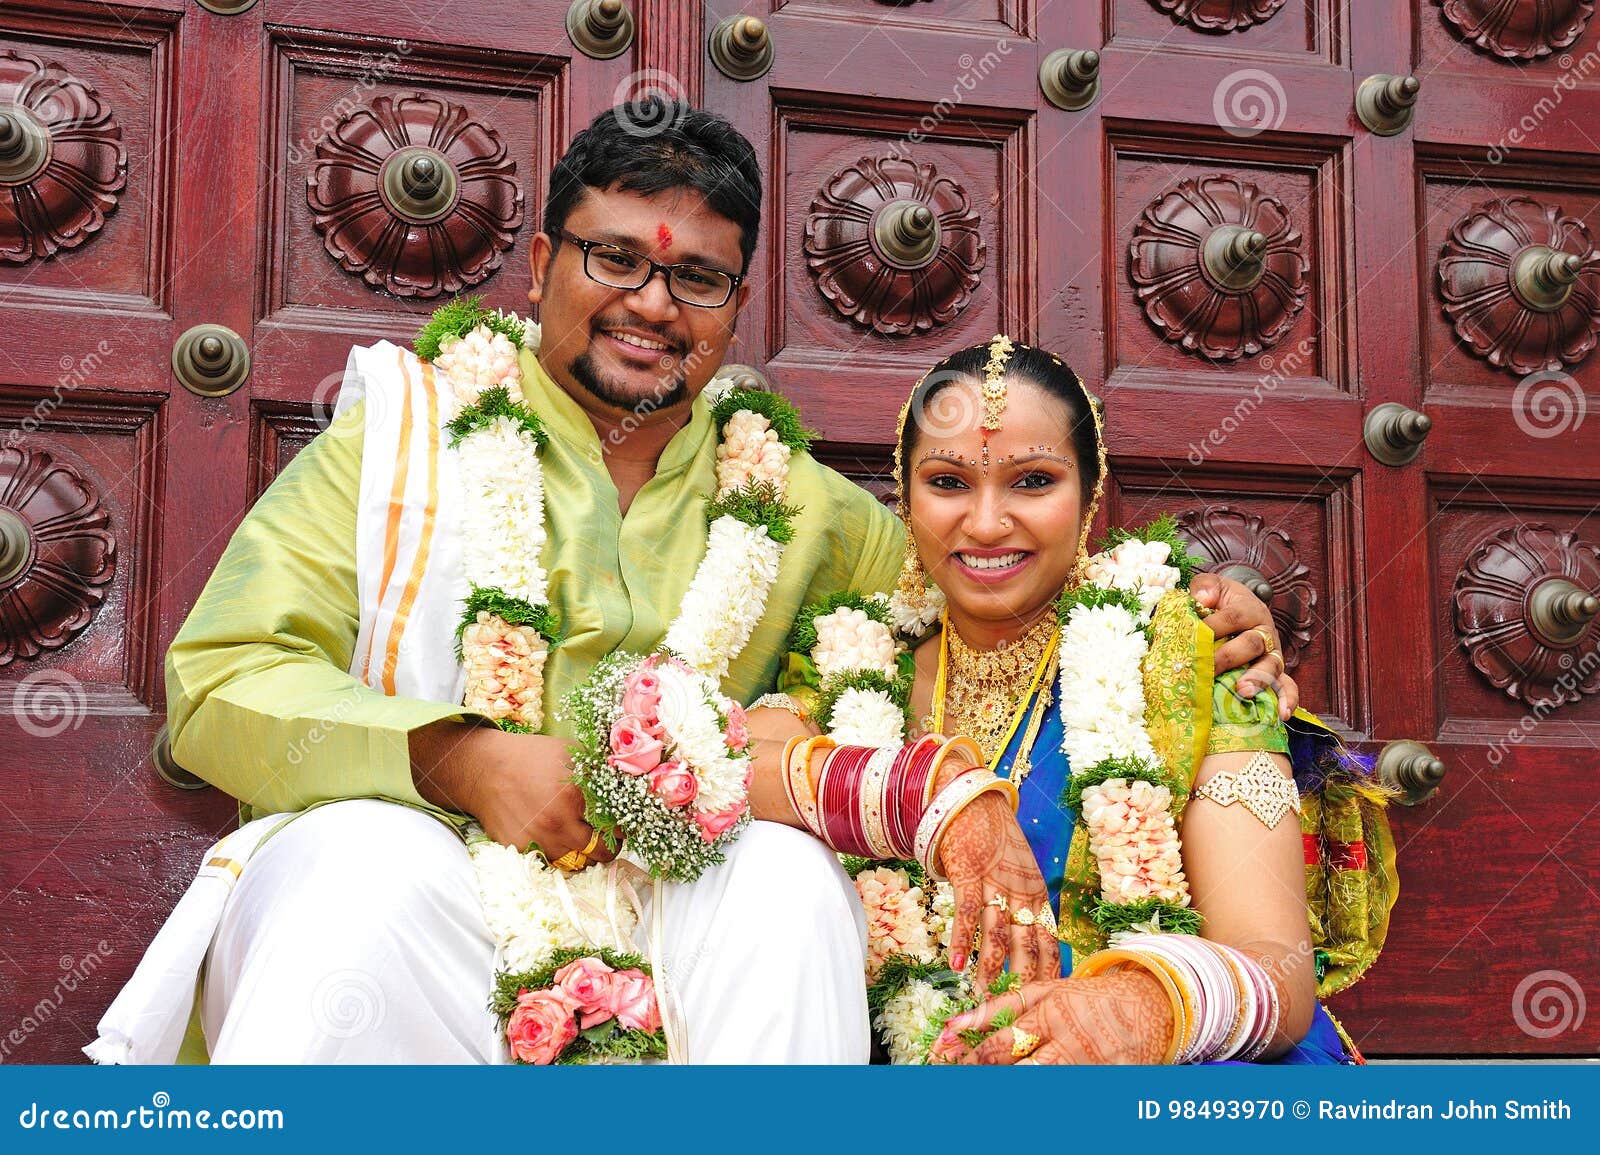 Indian Wedding Couple Editorial Image Image Of Indian 98493970